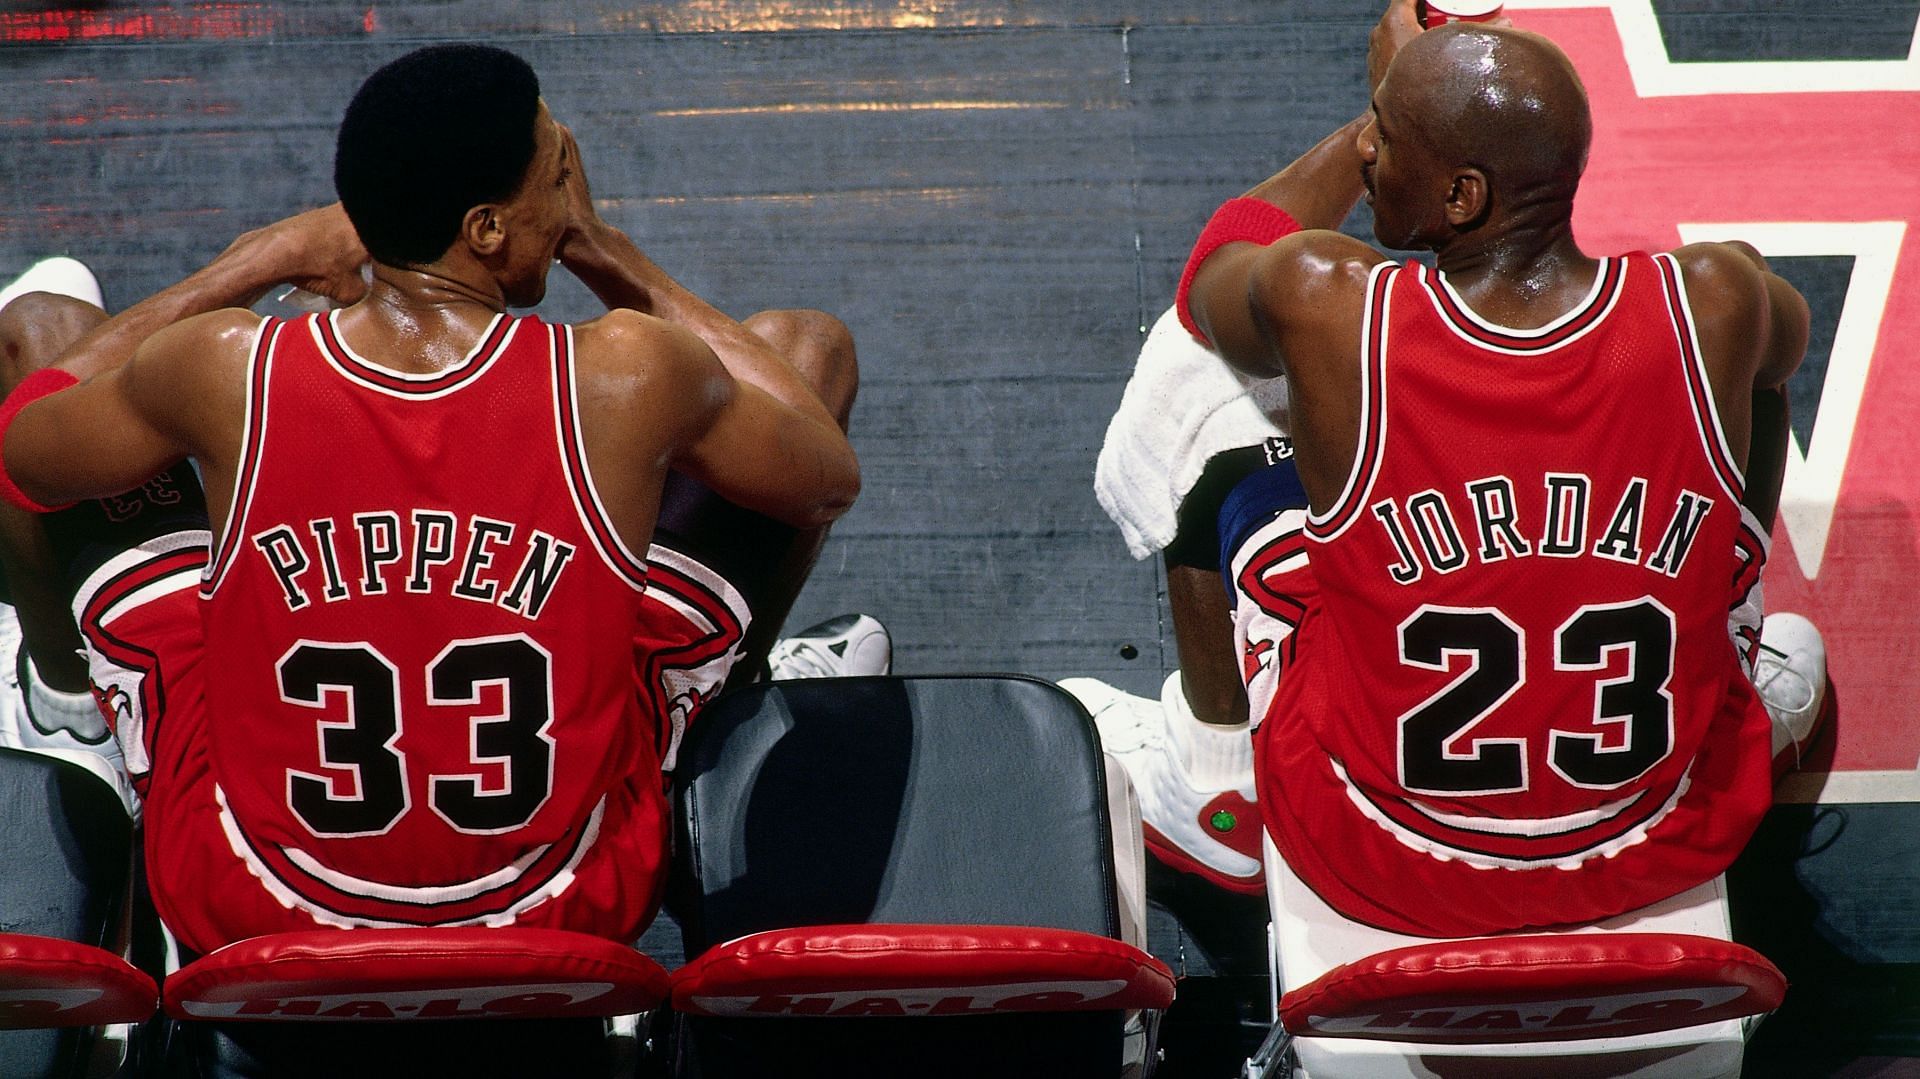 Scottie Pippen and Michael Jordan of the Chicago Bulls